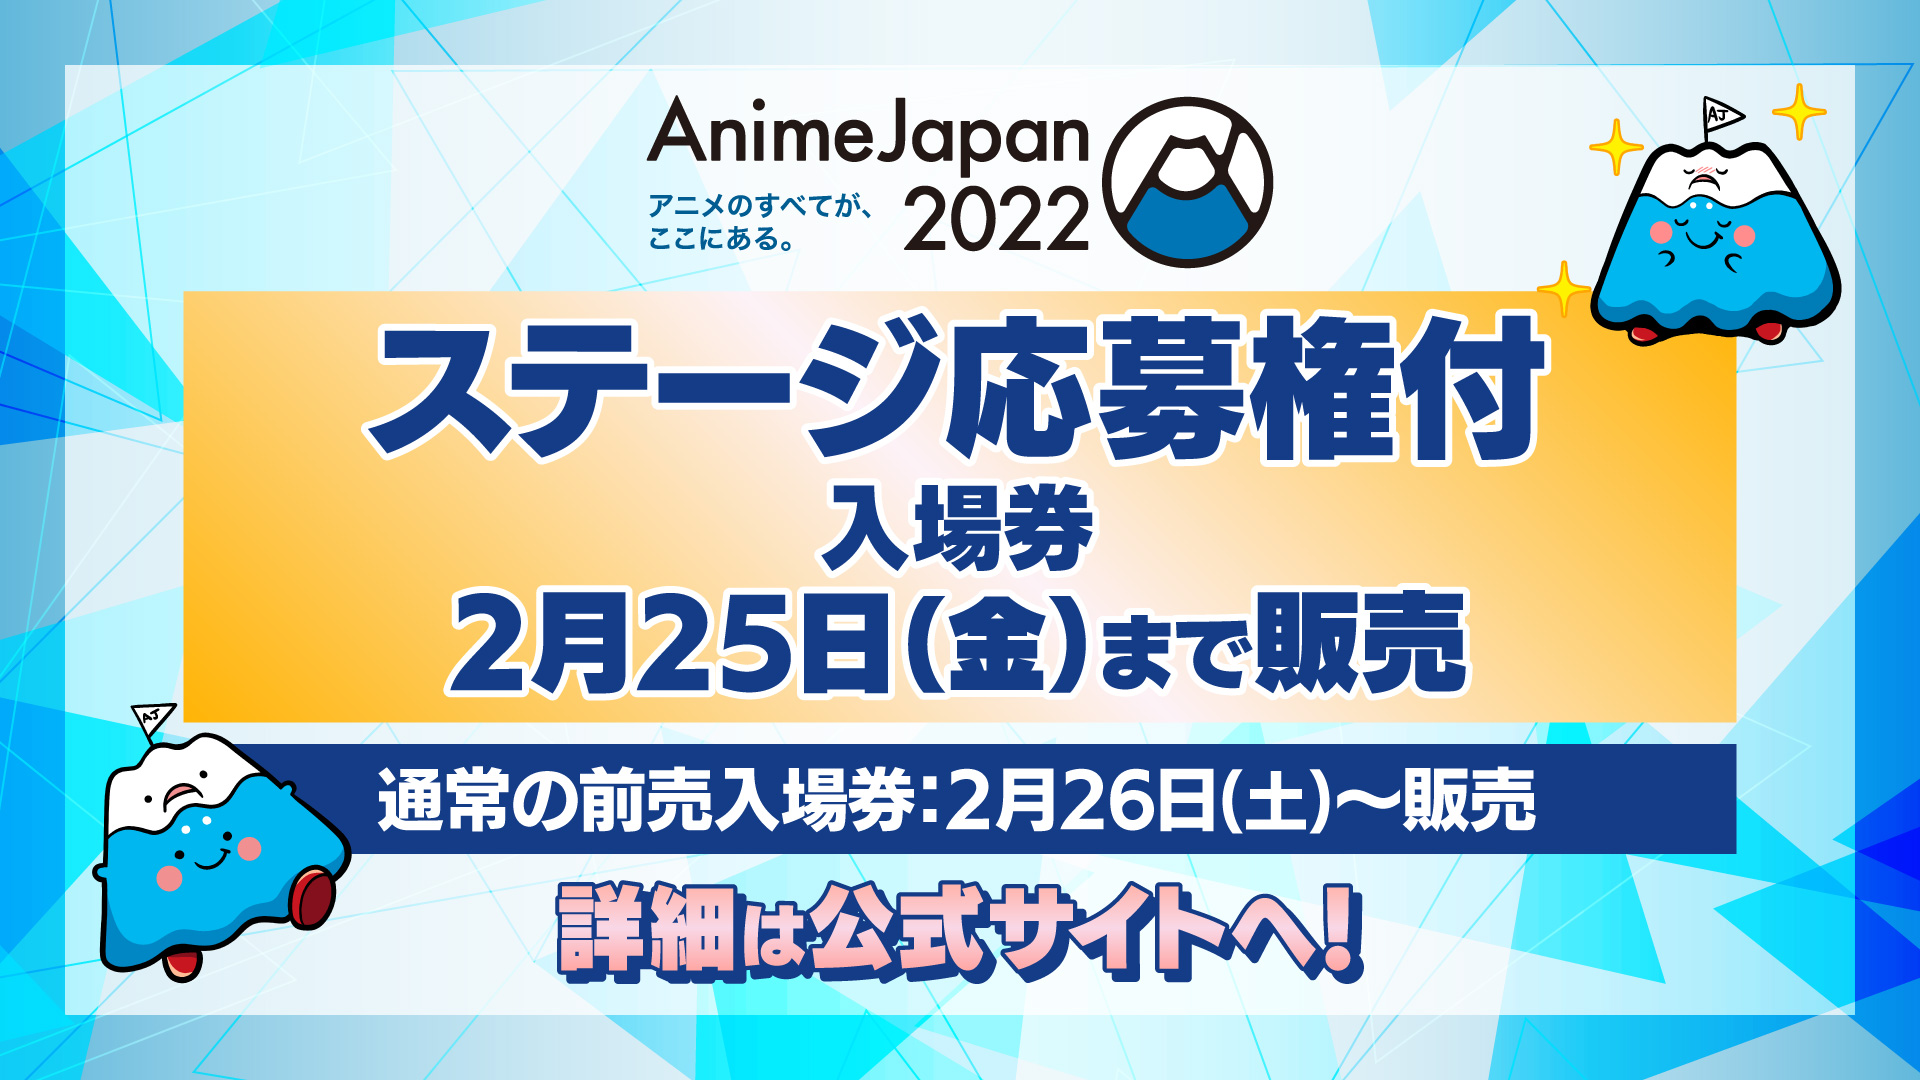 Animejapan22 3 27 アニメジャパン応募権付き入場券 日